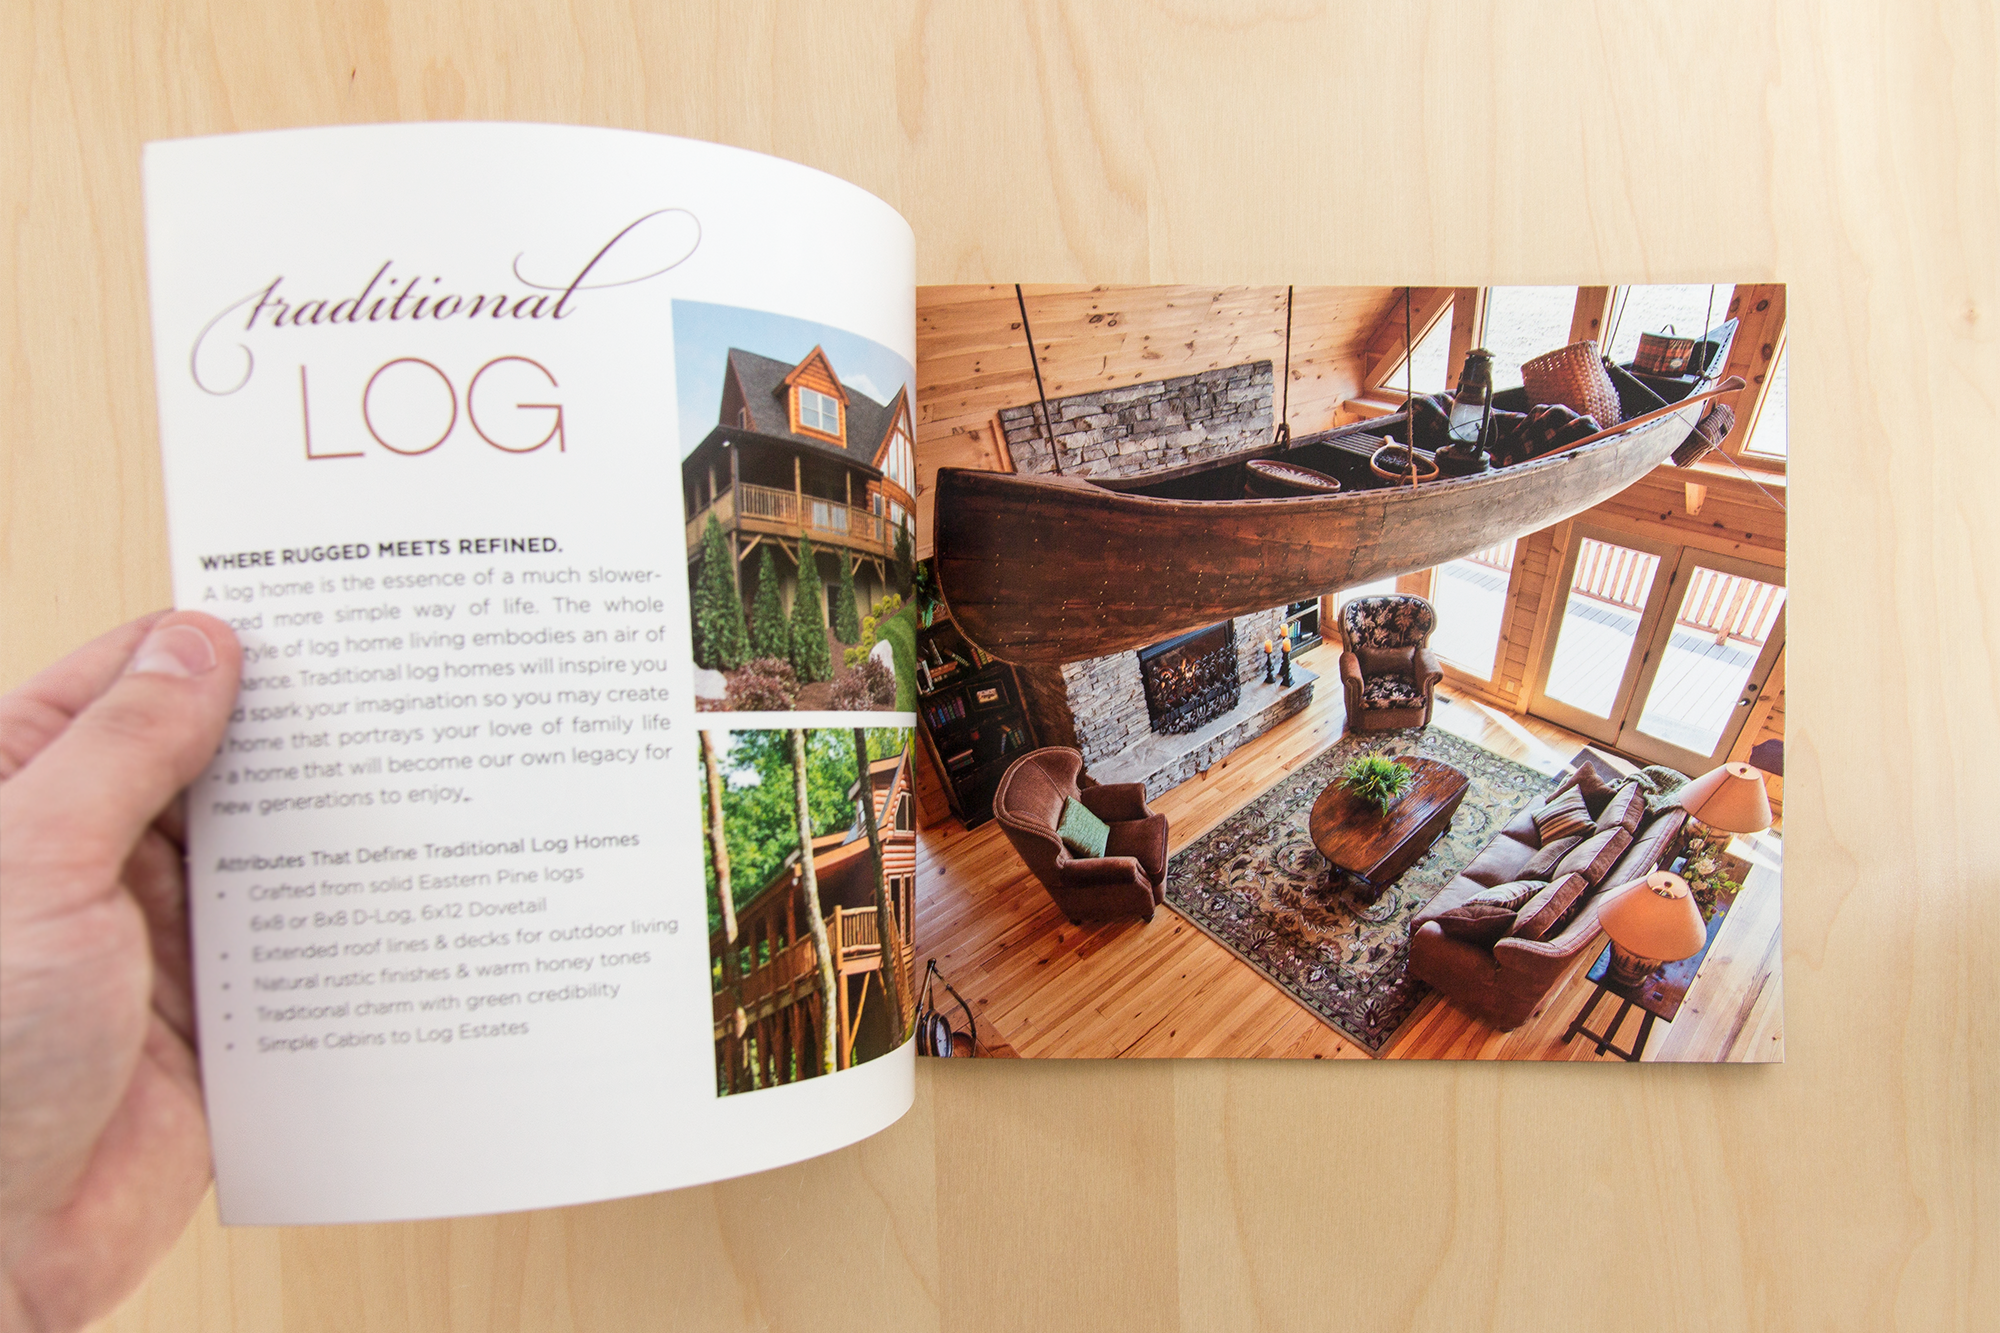 Blue Ridge Log Cabins - Brochure